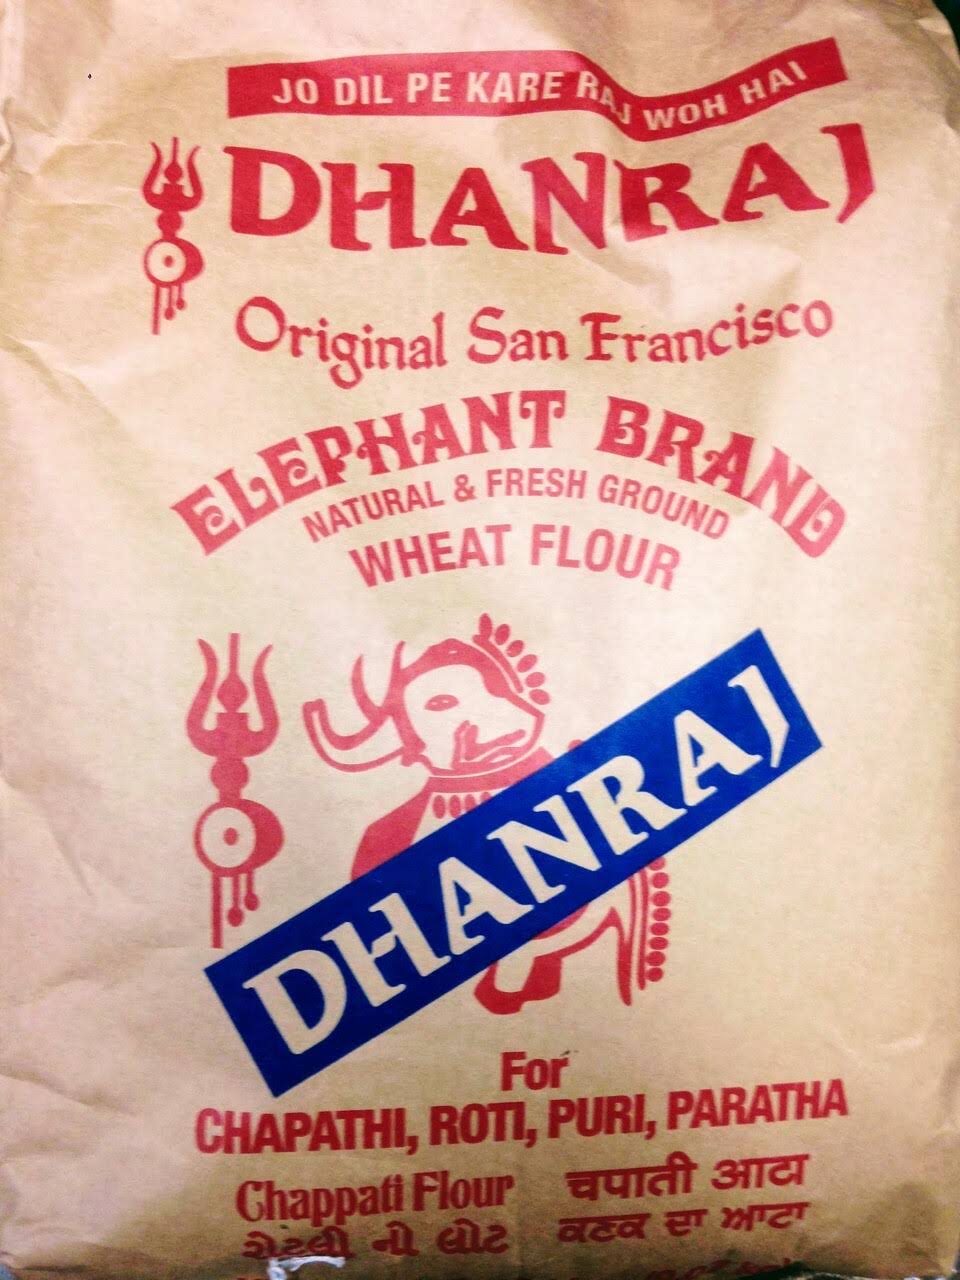 Bazaar9.com Dhanraj Elephant Brand Wheat Flour 20lb